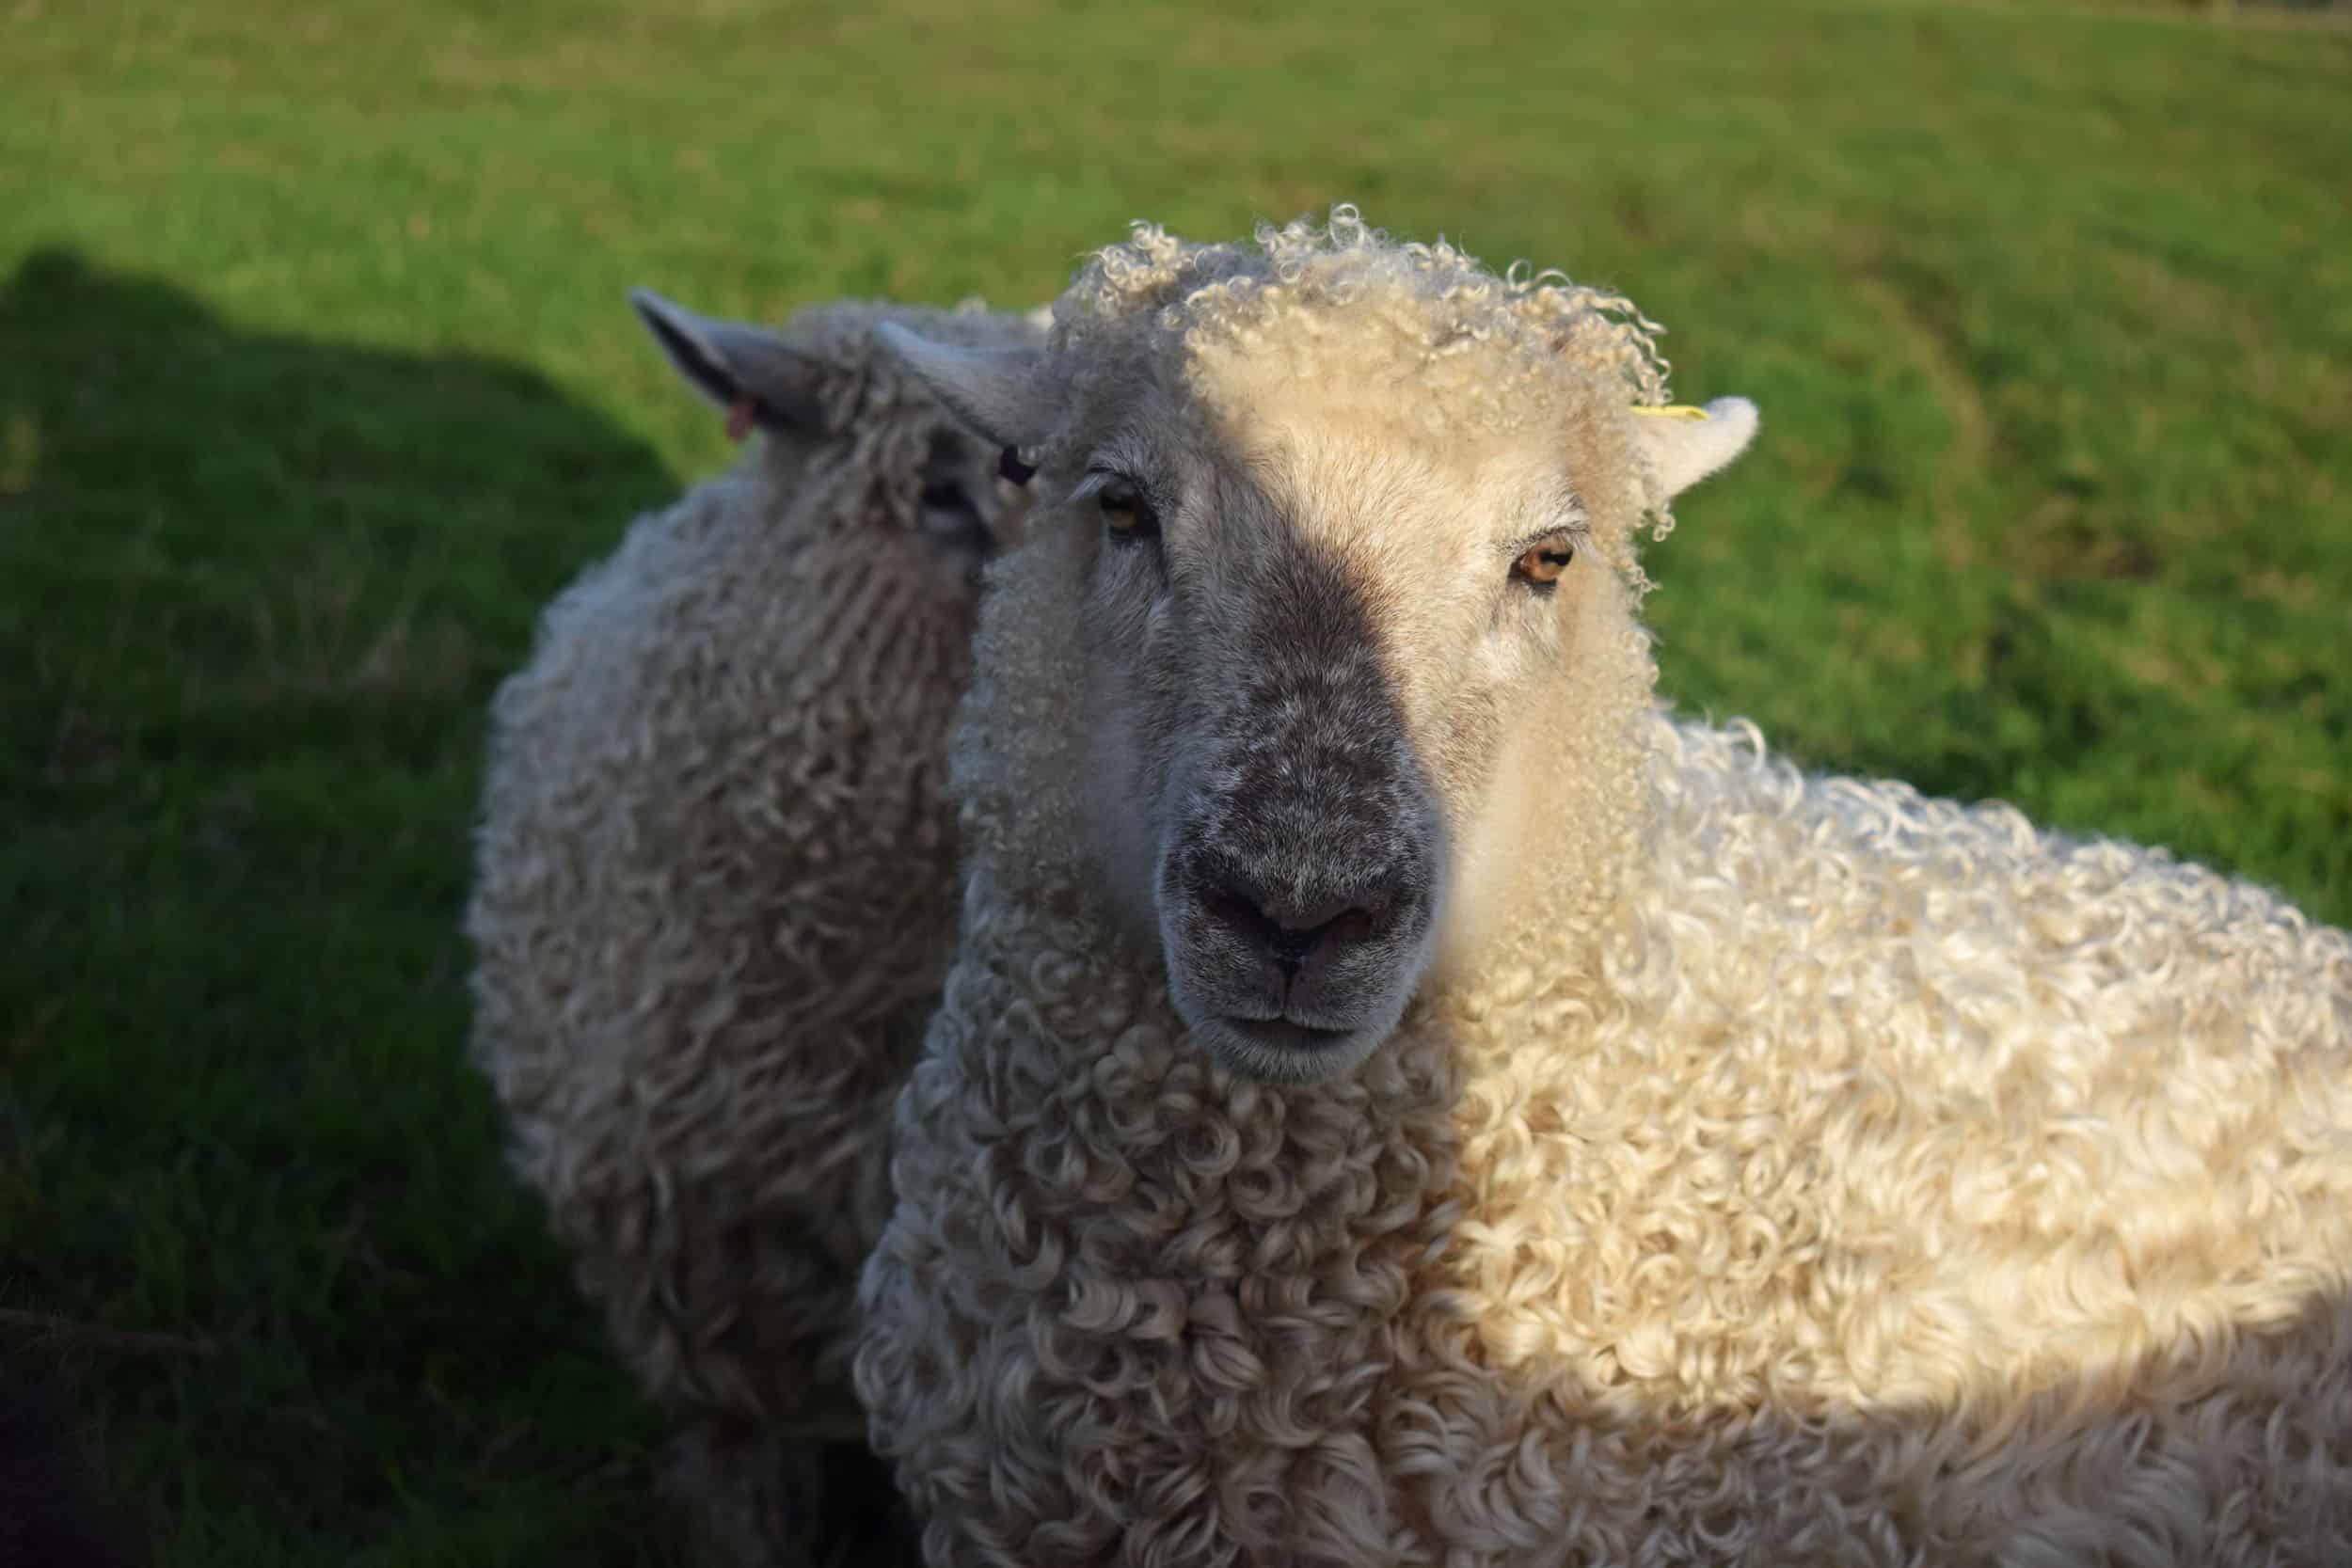 Porridge gotland cross greyface dartmoor sheep longwool patchwork curls white wool